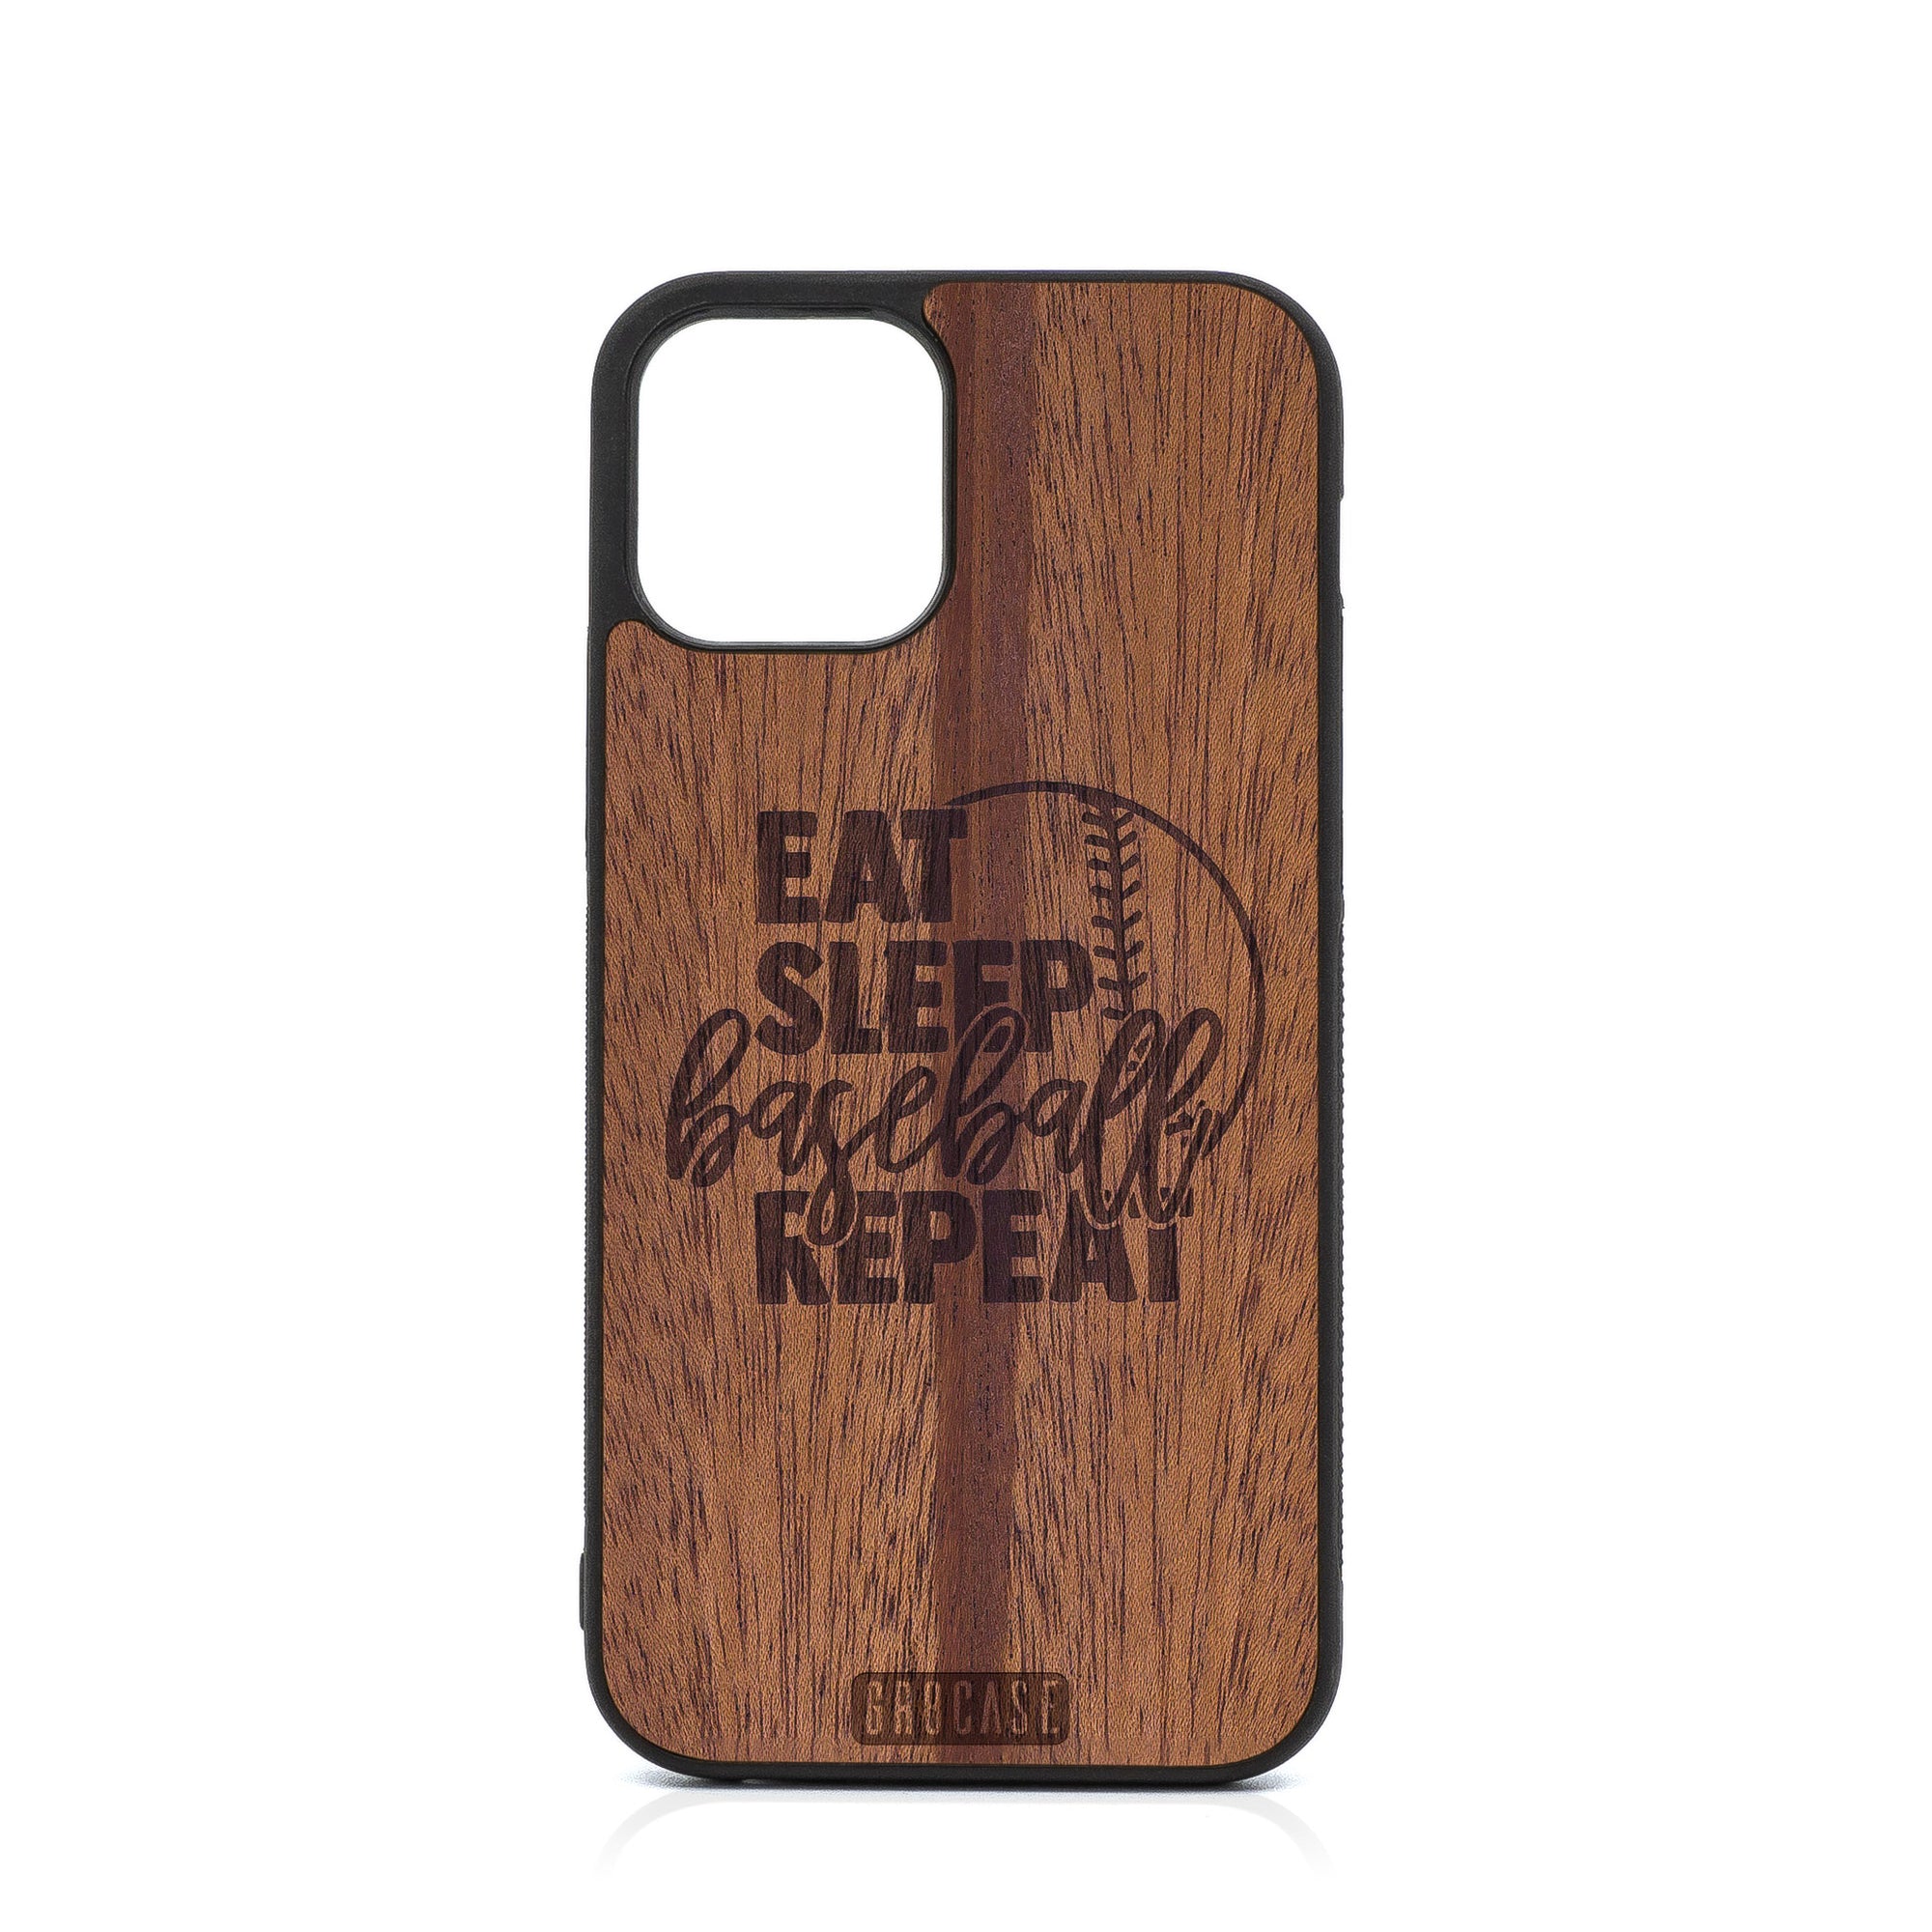 Eat Sleep Baseball Repeat Design Wood Case For iPhone 12